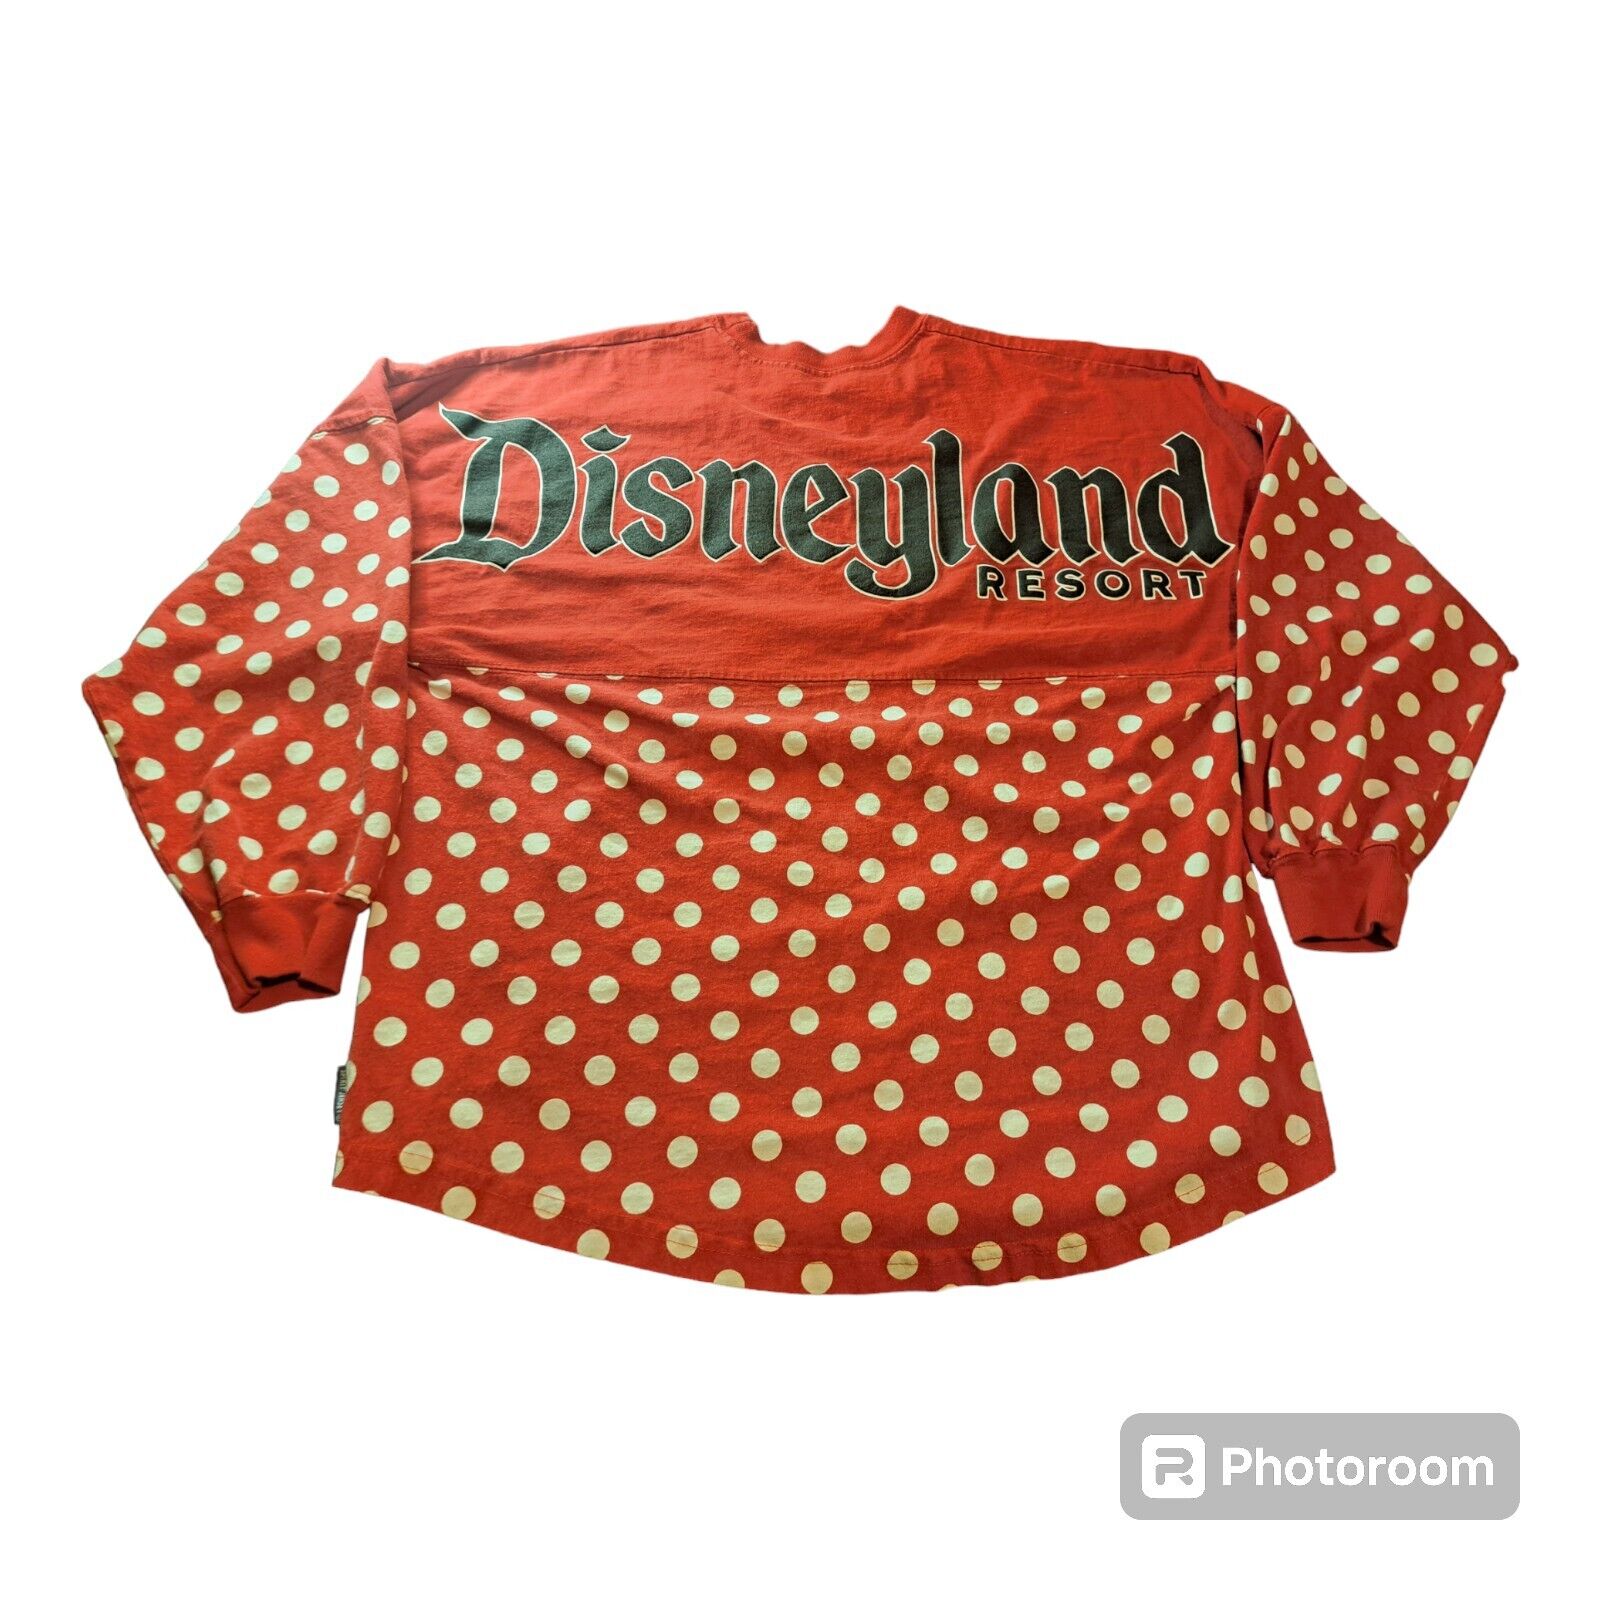 Disneyland Resort Spell-out Minnie Mouse Polka-dot Spirit Jersery Women's Sz M